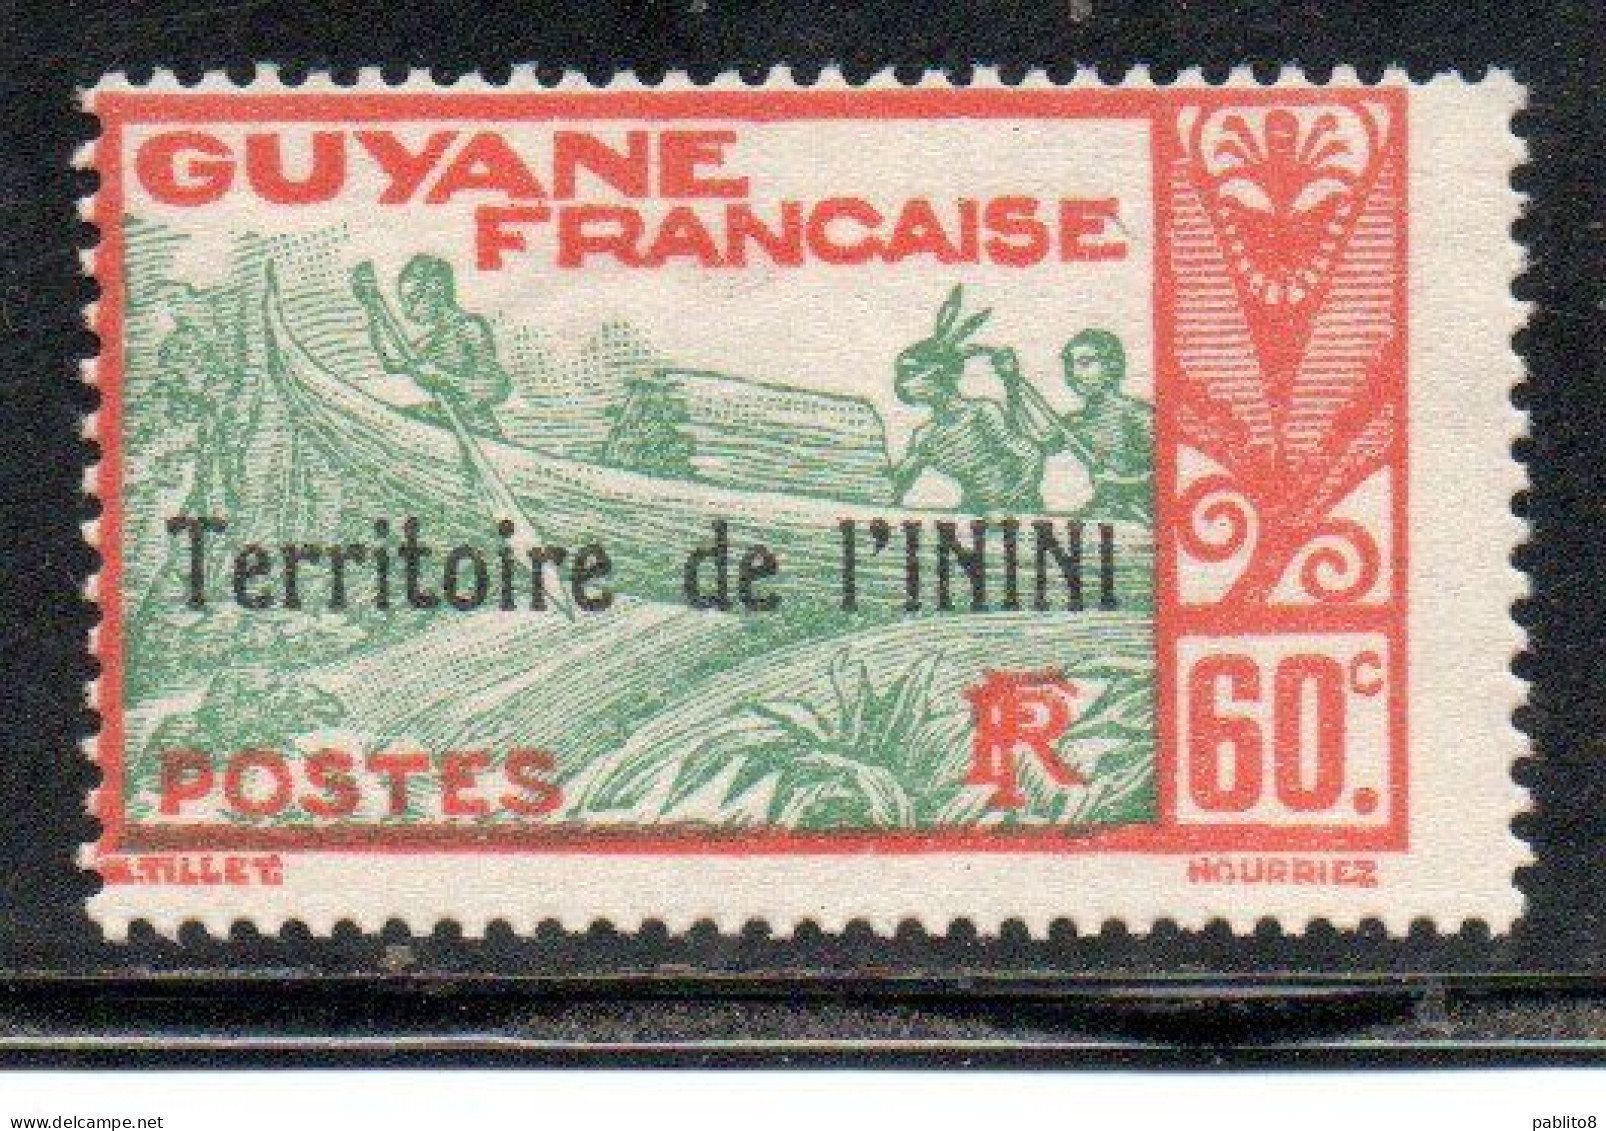 GUYANE FRANCAISE TERRITOIRE DE L'ININI OVERPRINTED SURCHARGE 1932 1940 SHOOTING RAPIDS MARONI RIVER 60c MNH - Neufs